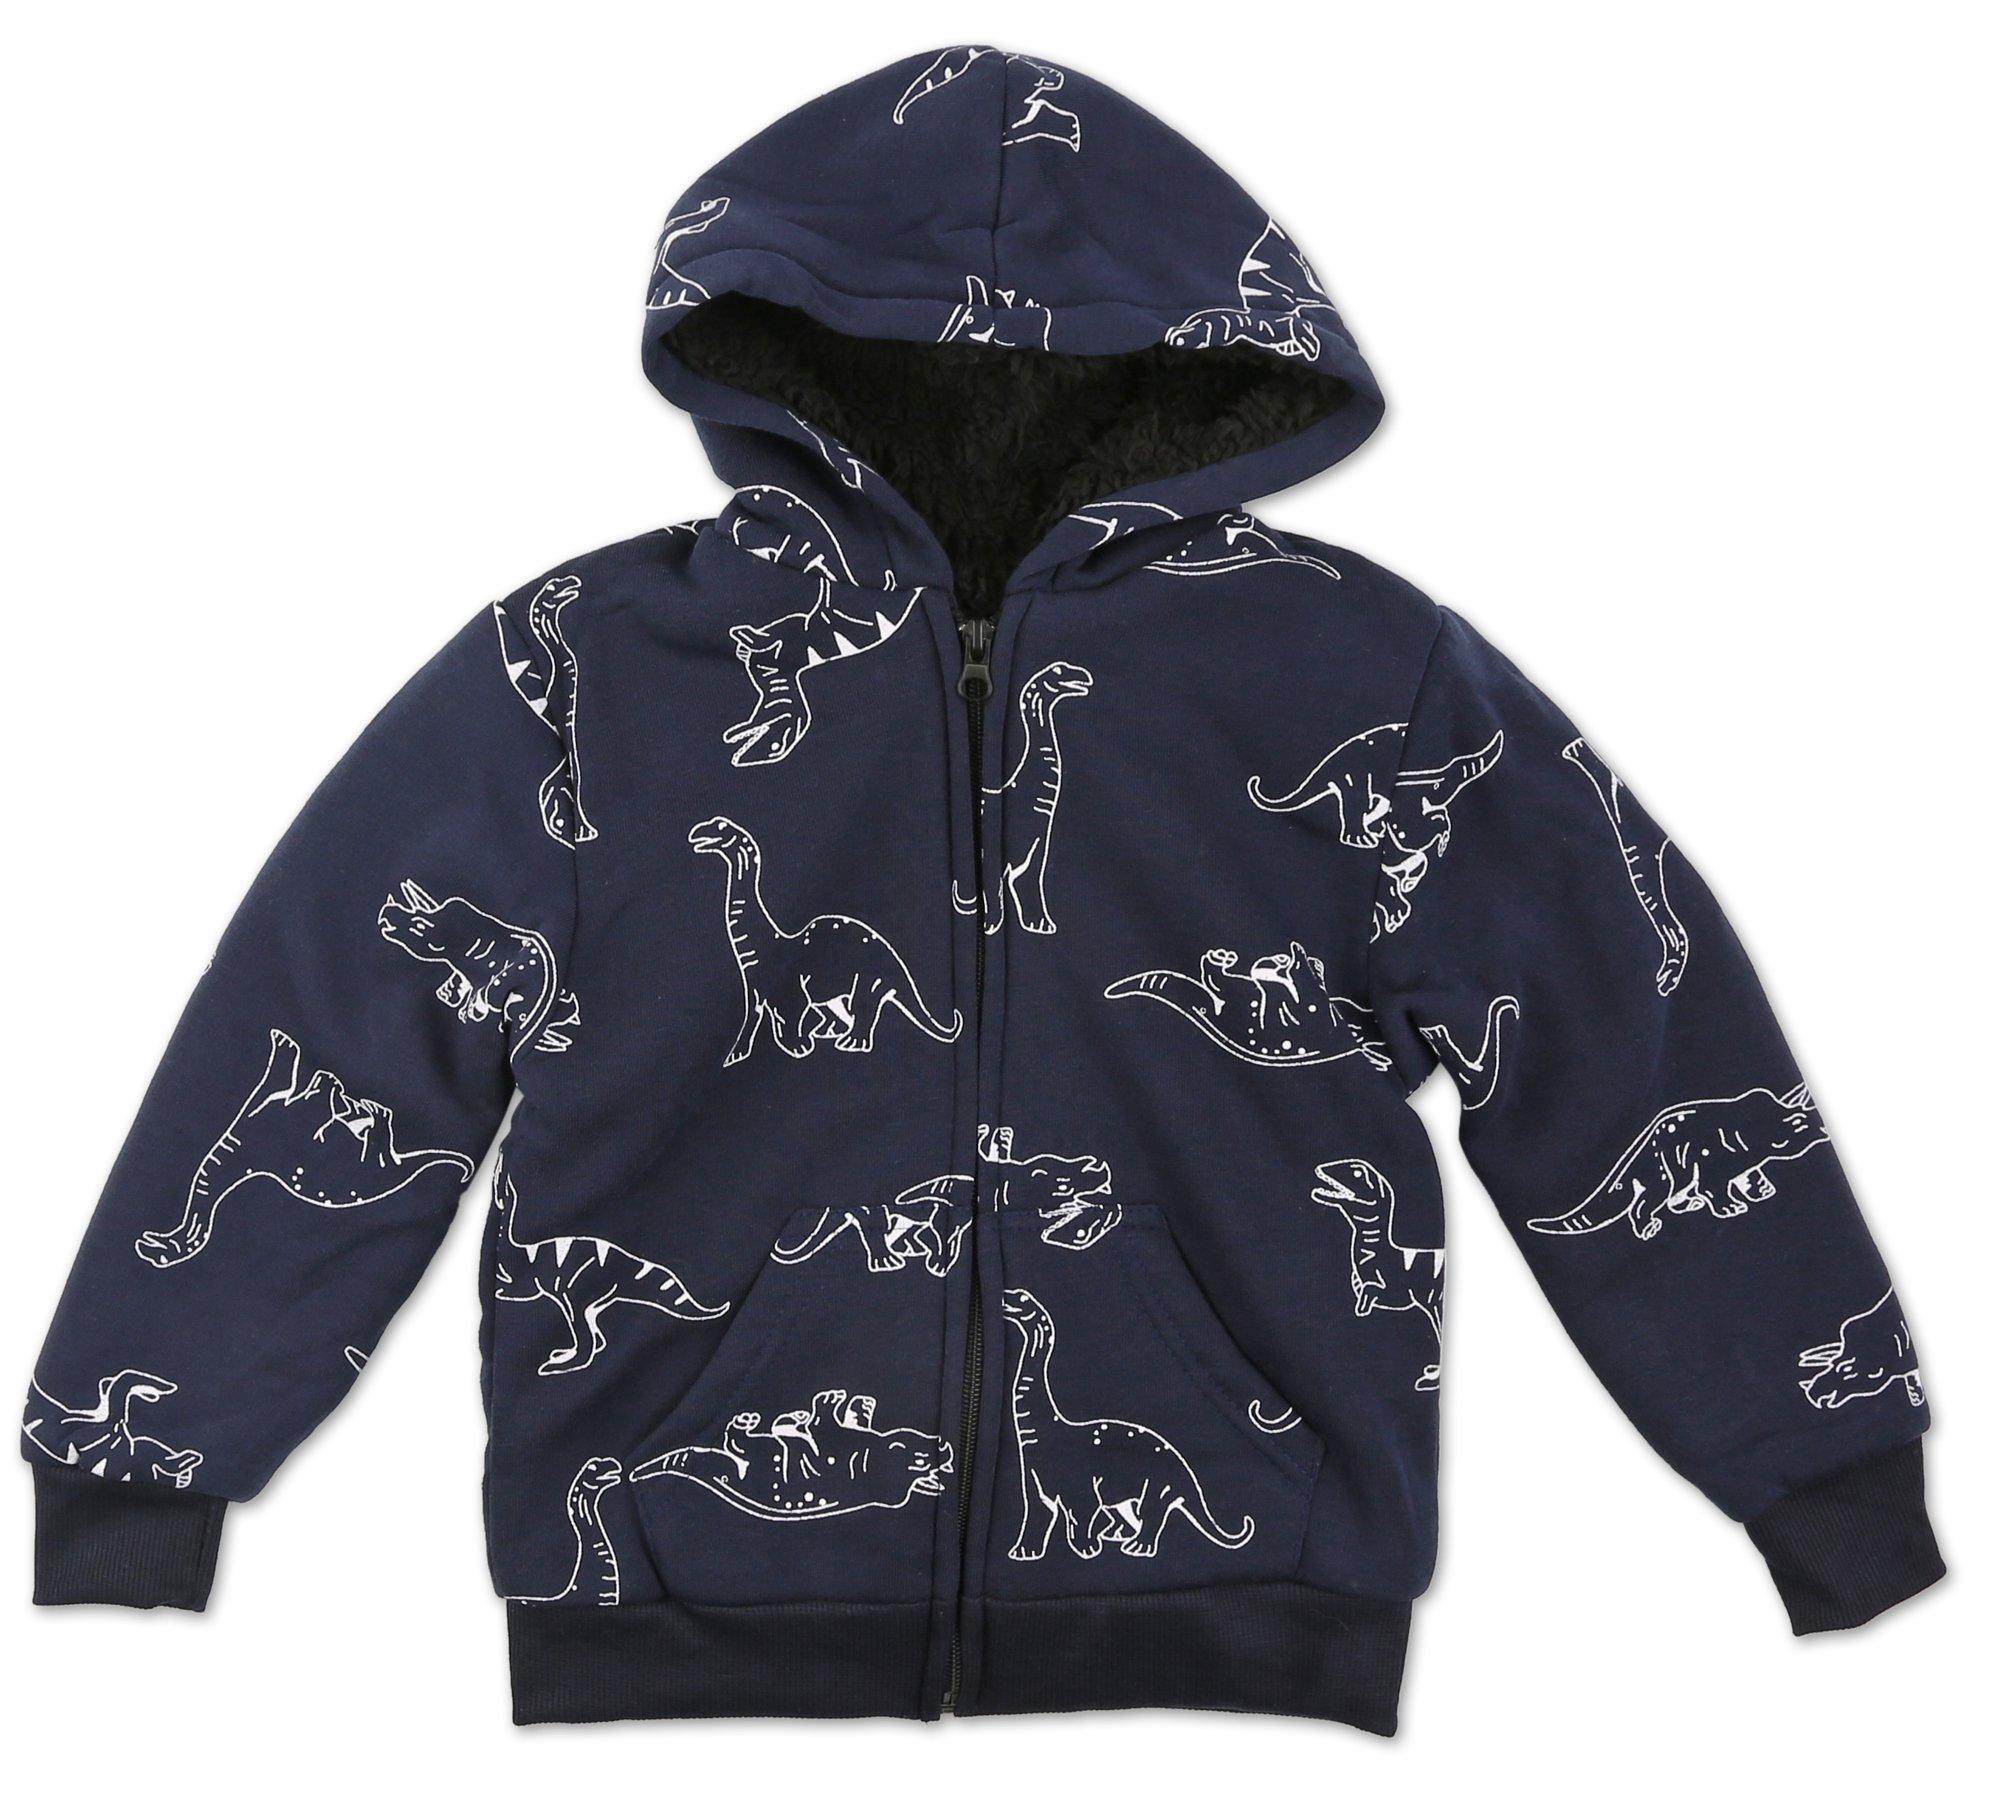 Toddler Boys Dinosaur Zip Up Jacket